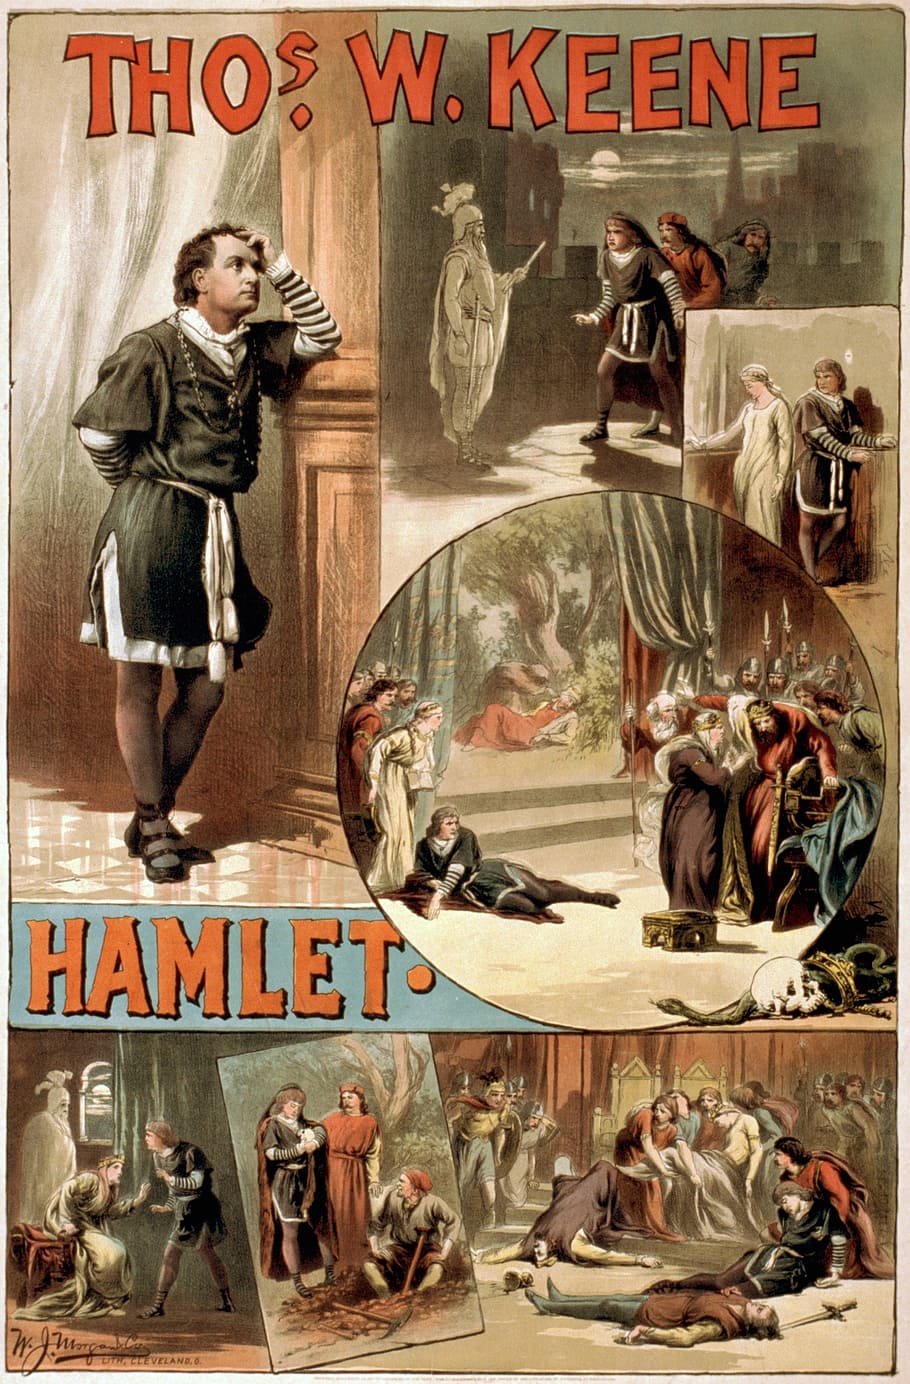 thos, w., keene poster, william shakespeare, hamlet, poster, 1884, full length, text, architecture